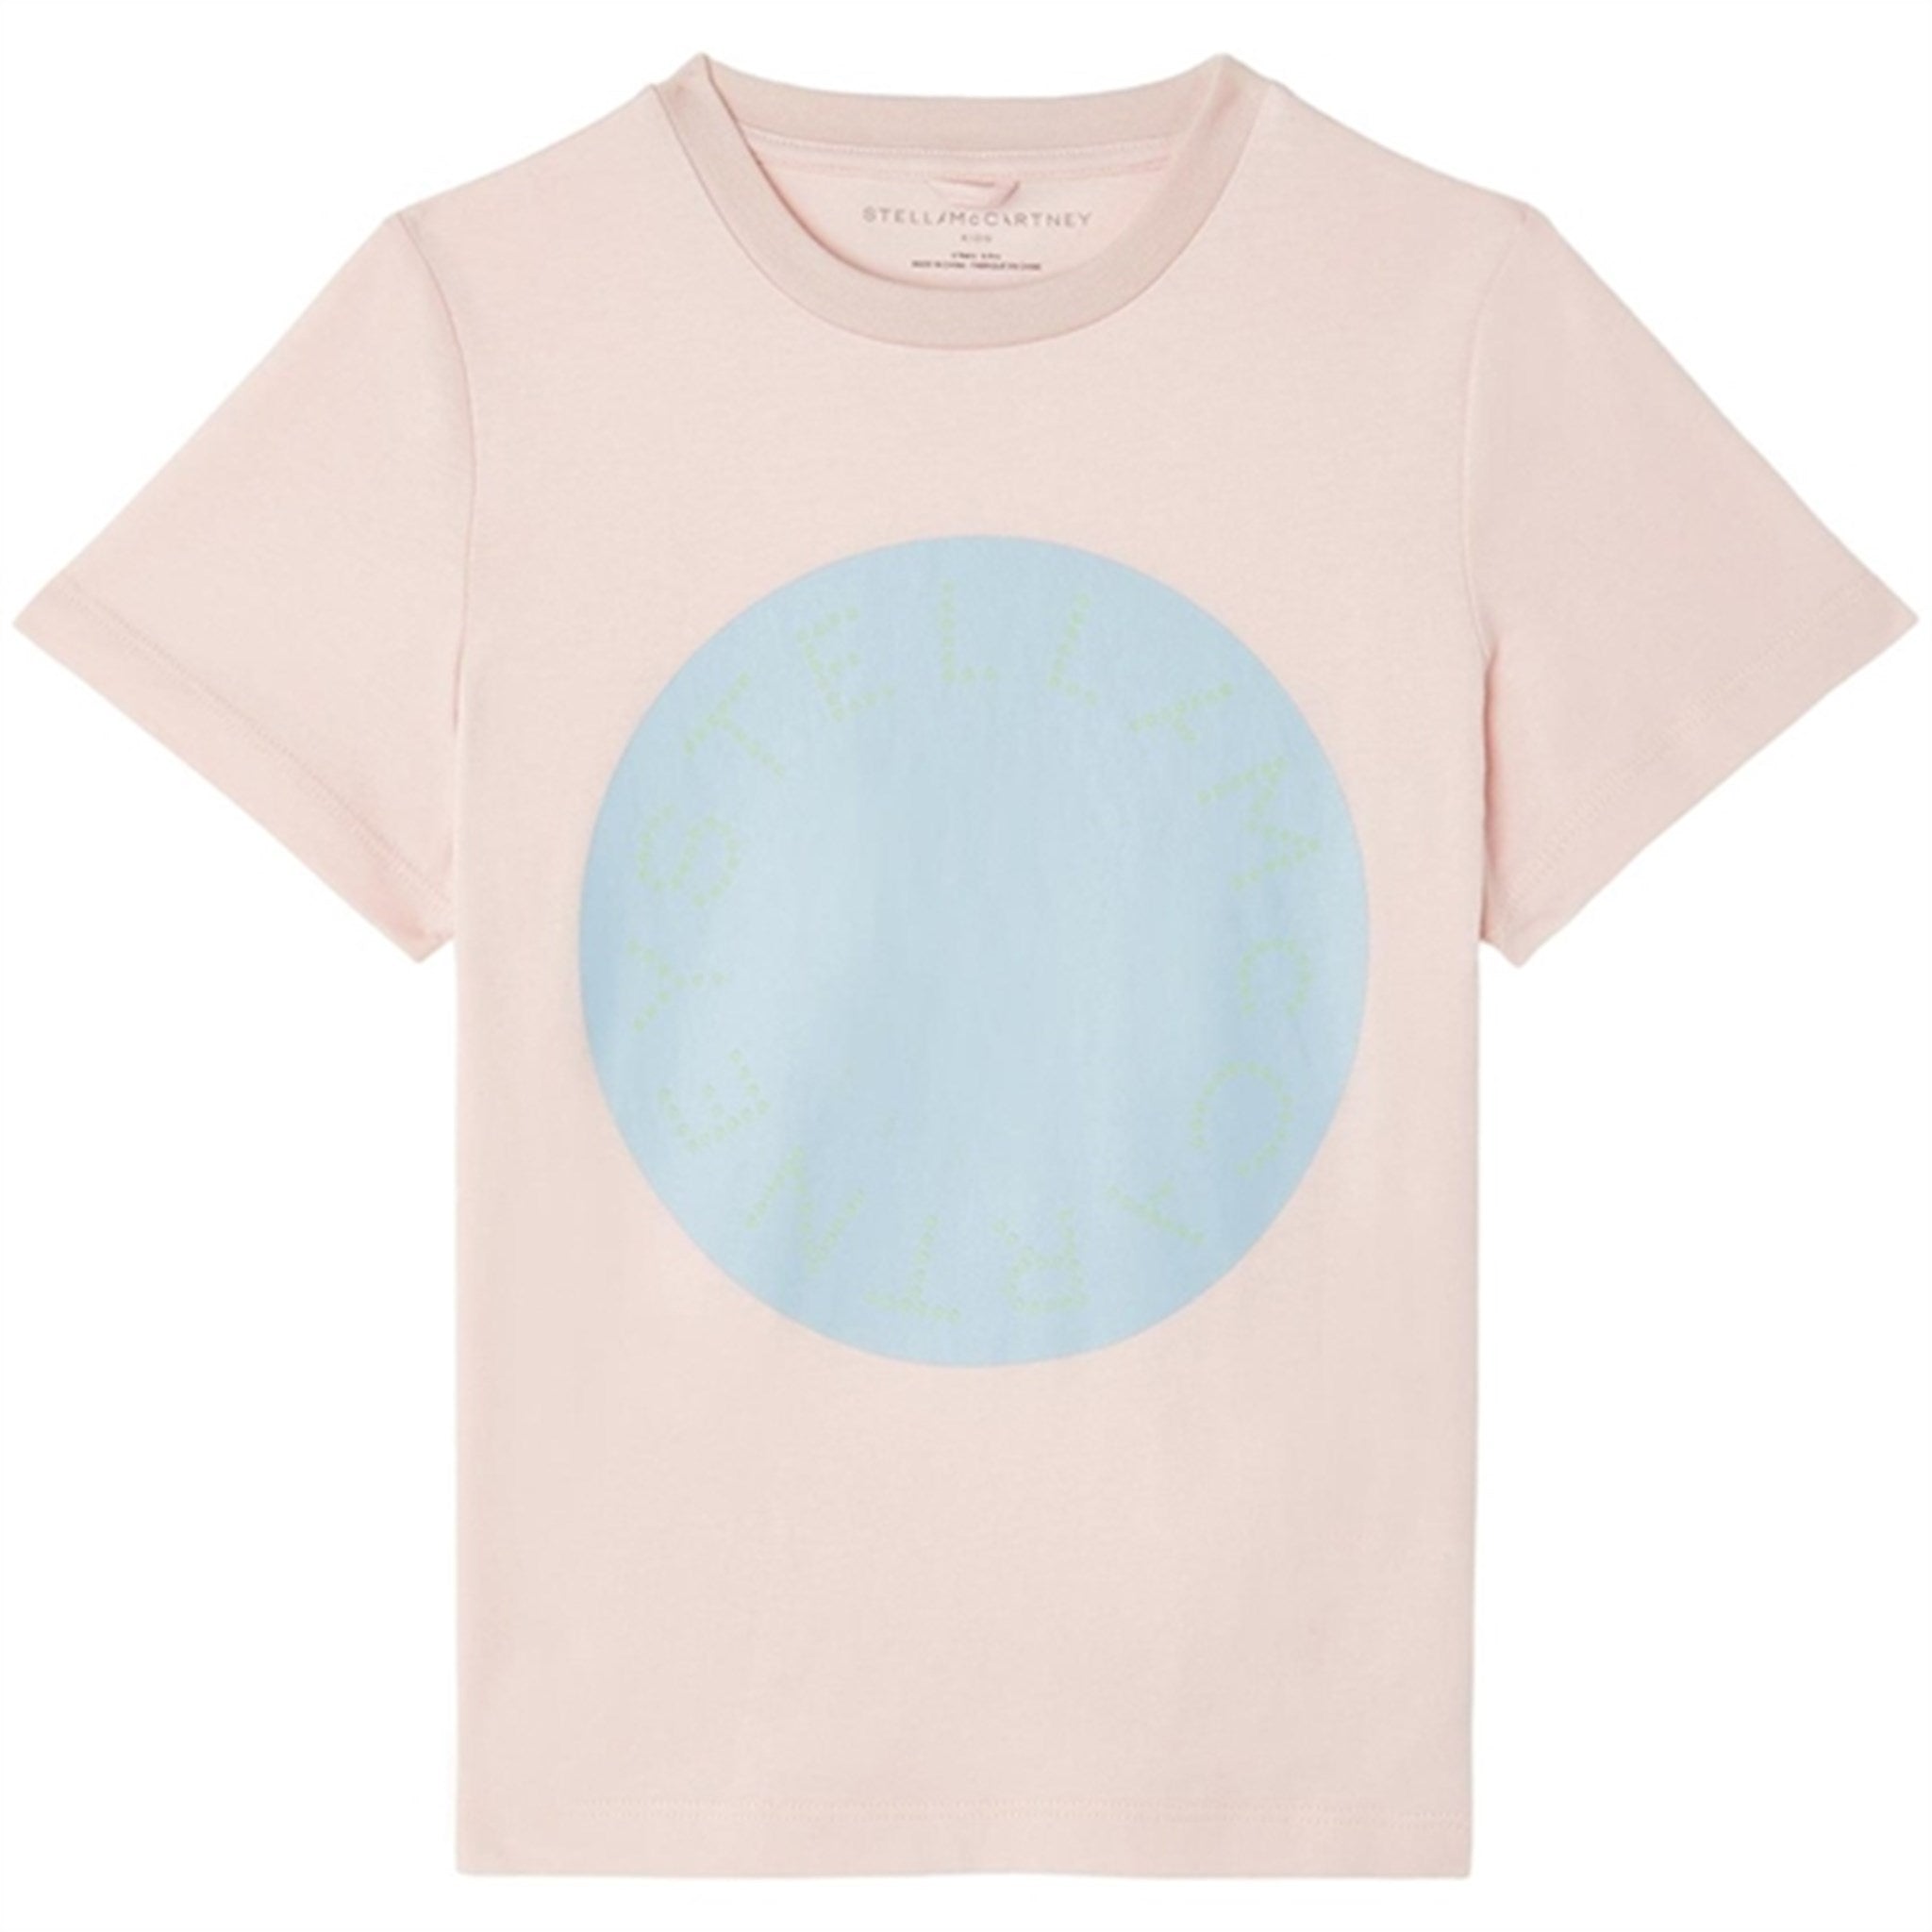 Stella McCartney Pink T-Shirt 2